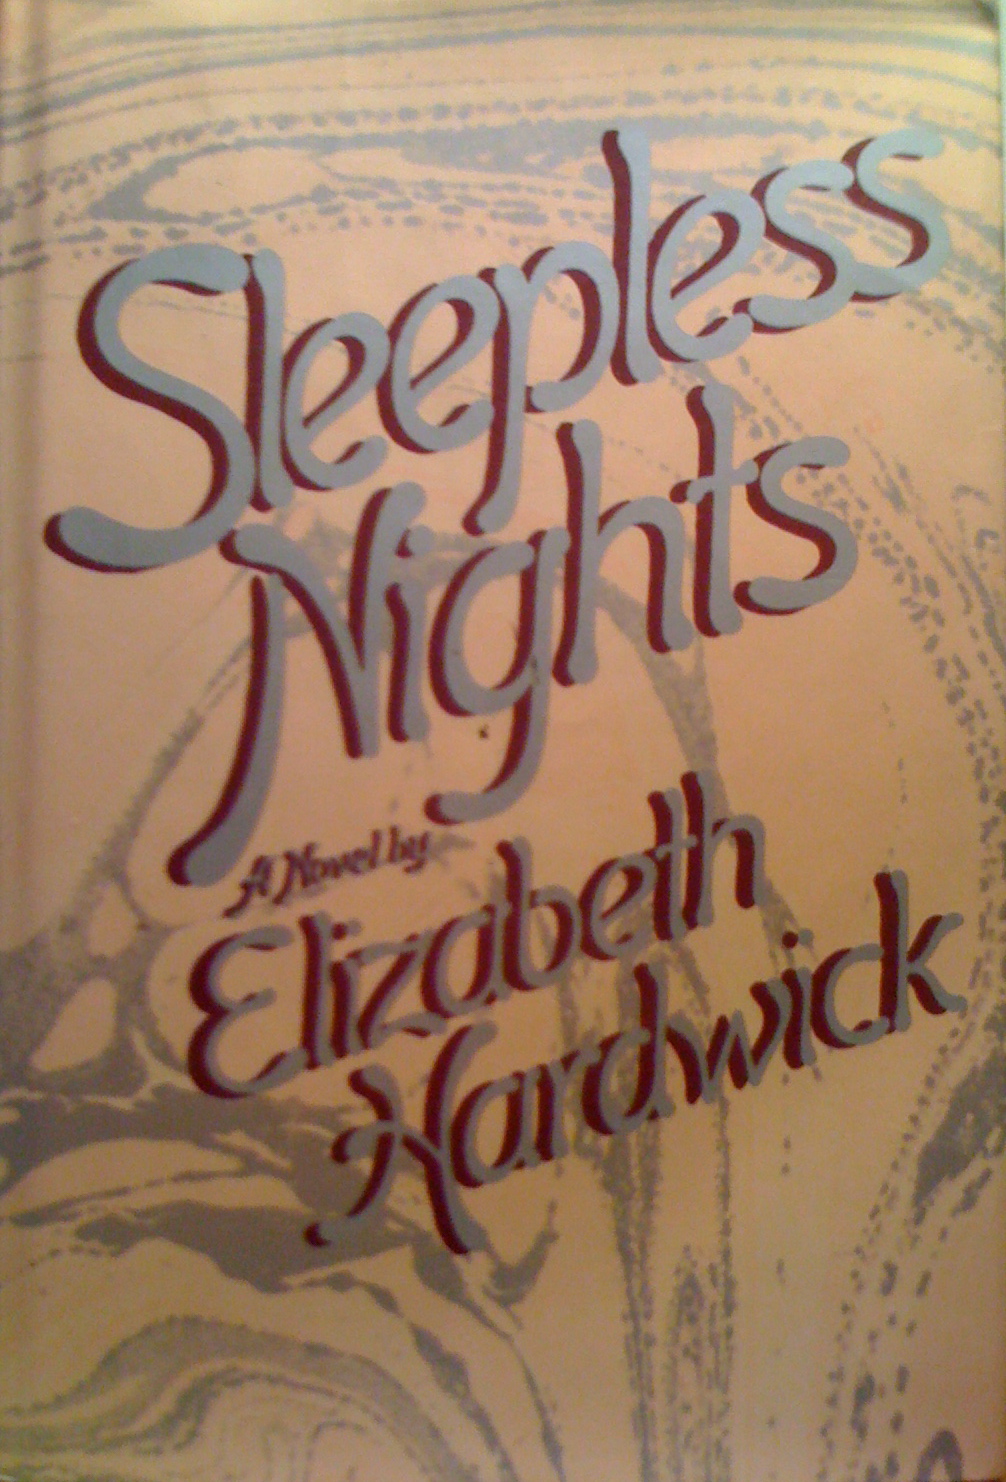 sleepless nights by elizabeth hardwick